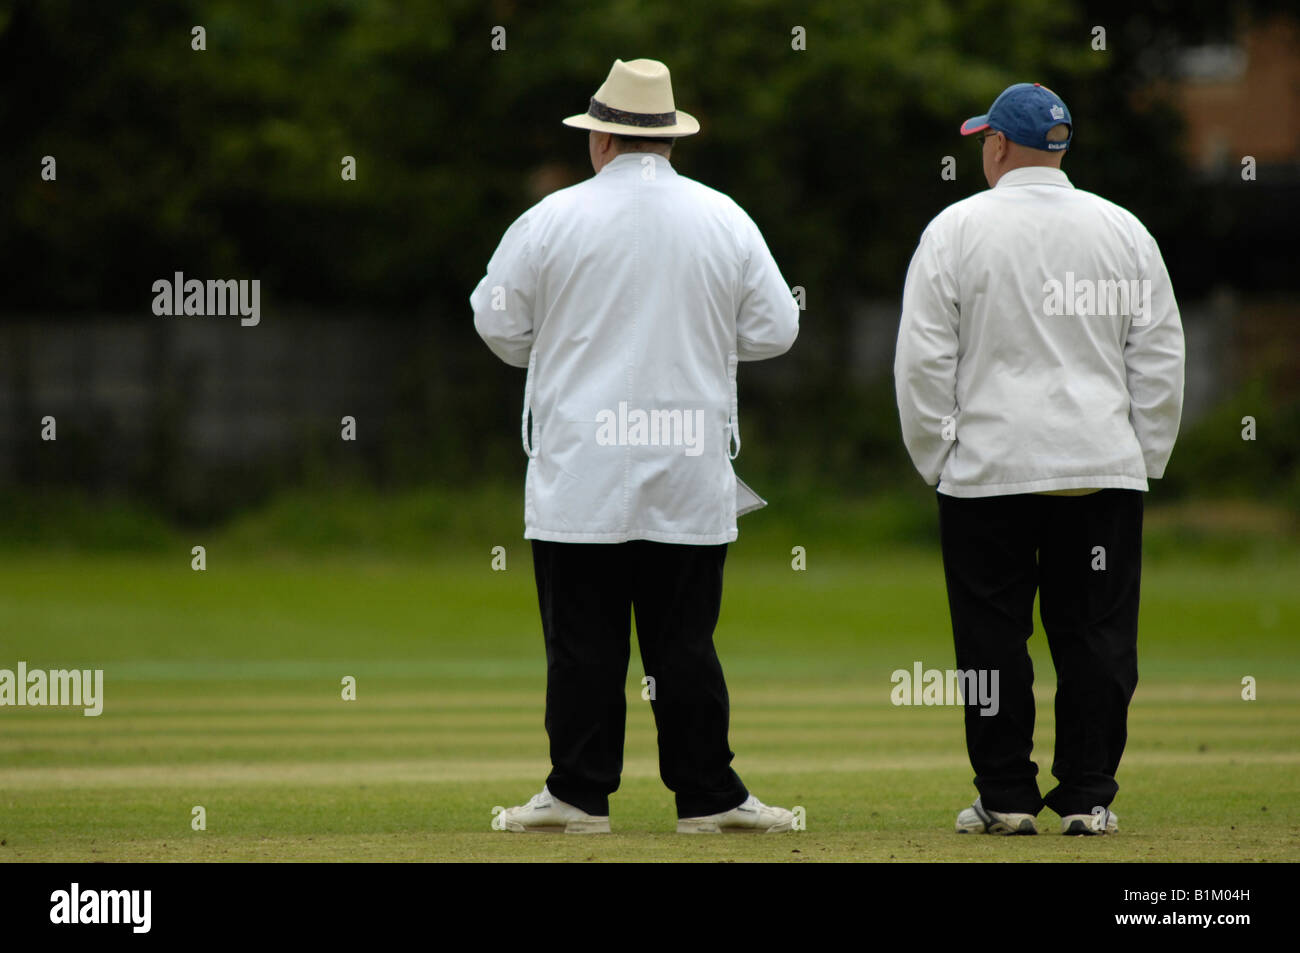 cricket umpires in conversation Stock Photo